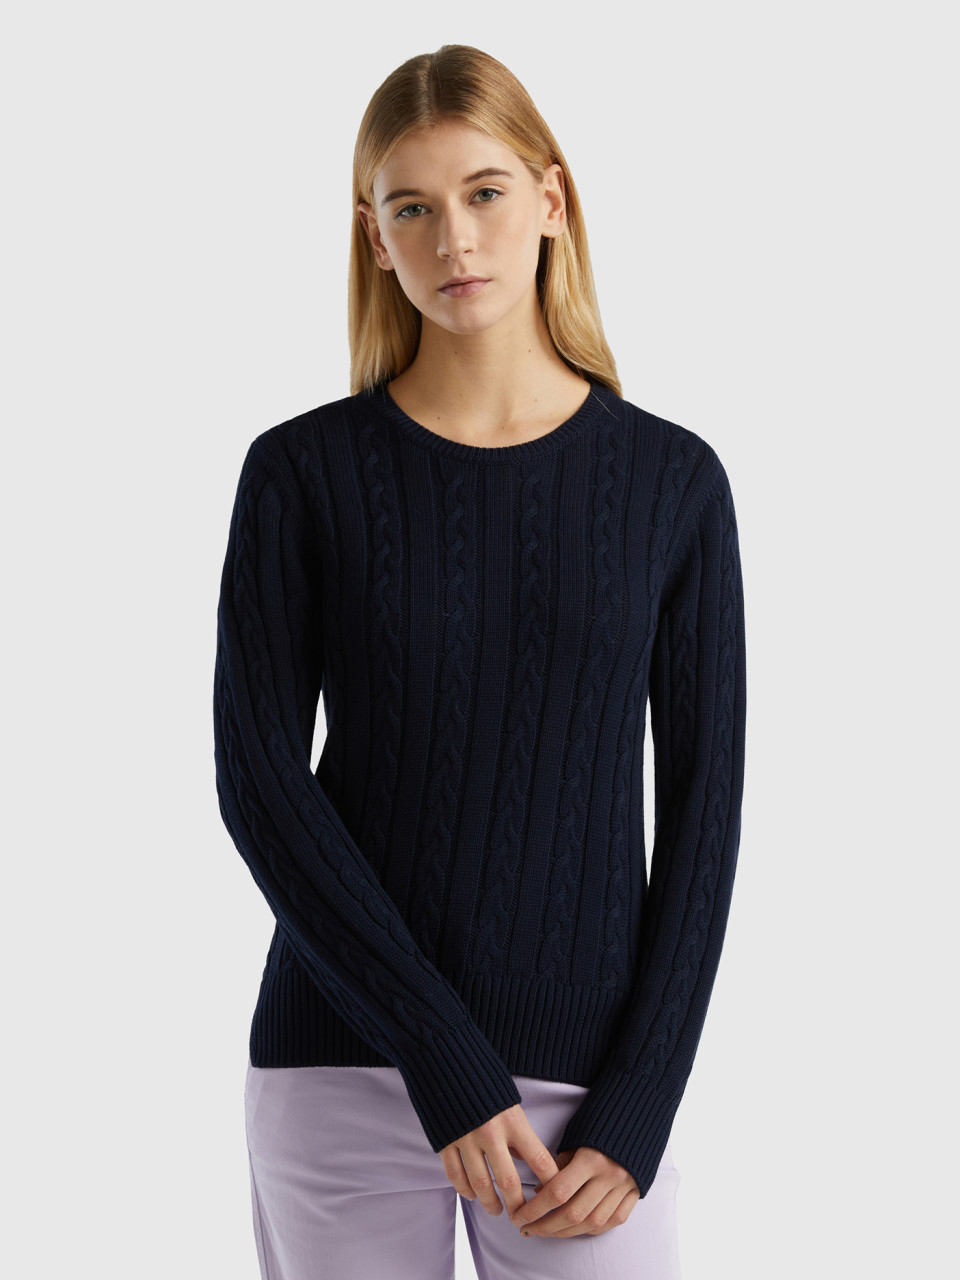 Benetton, Cable Knit Sweater 100% Cotton, Dark Blue, Women